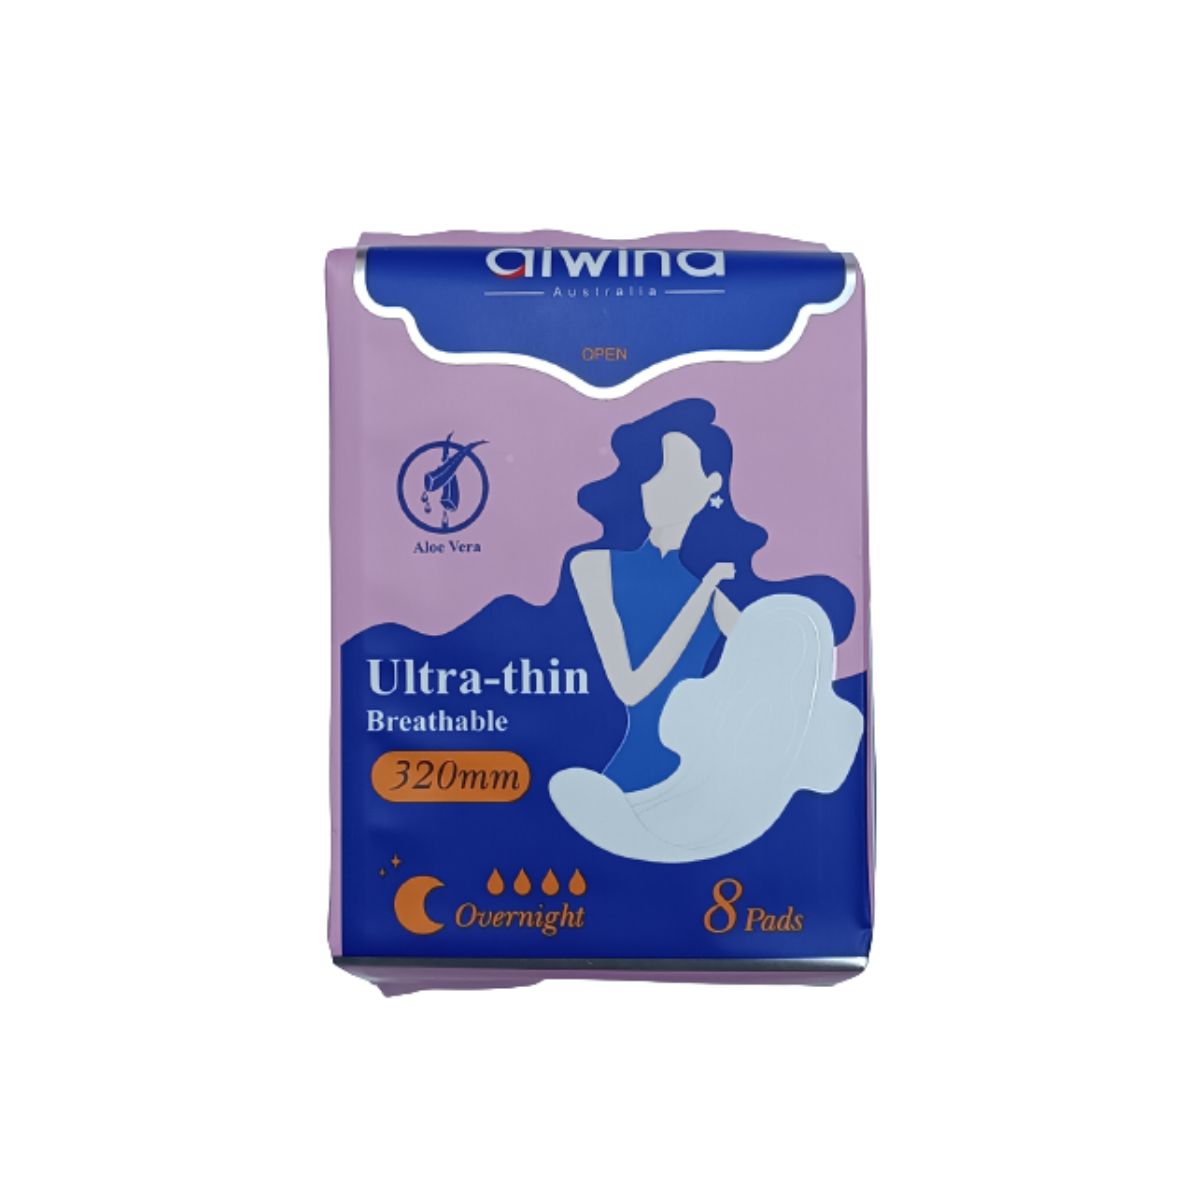 Aiwina Sanitary Napkin - Ultra-thin - Breathable - Overnight - 320mm - 8pads